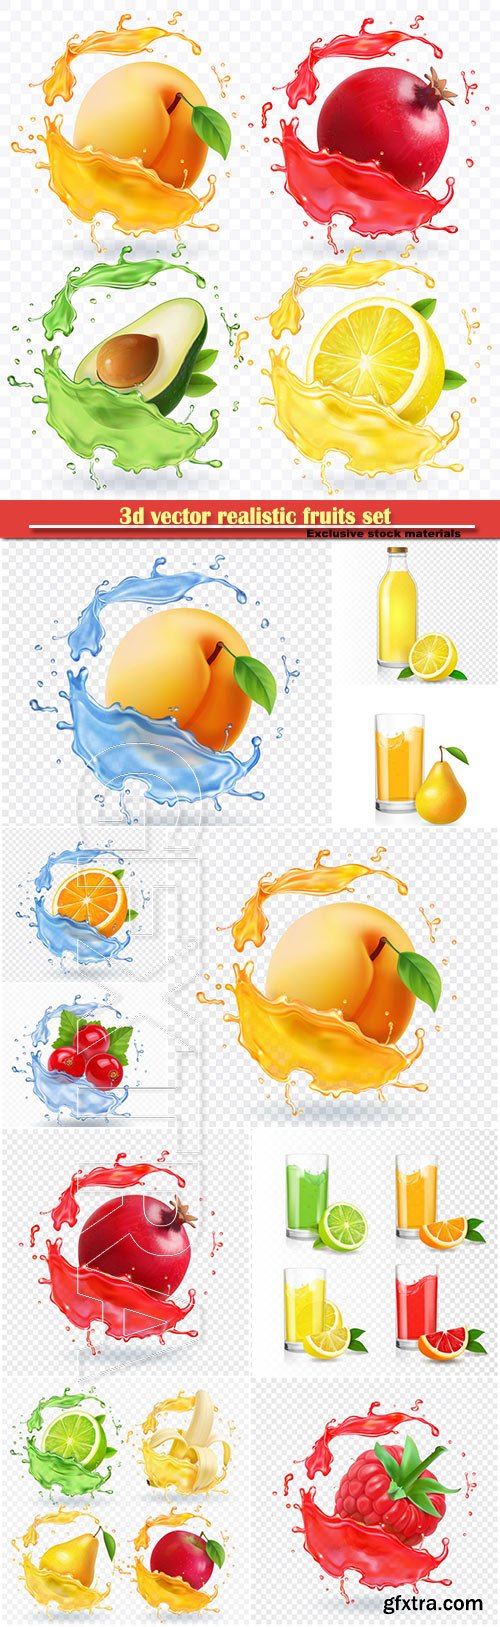 3d vector realistic fruits set, banana, apple, lime, pear juice splashes